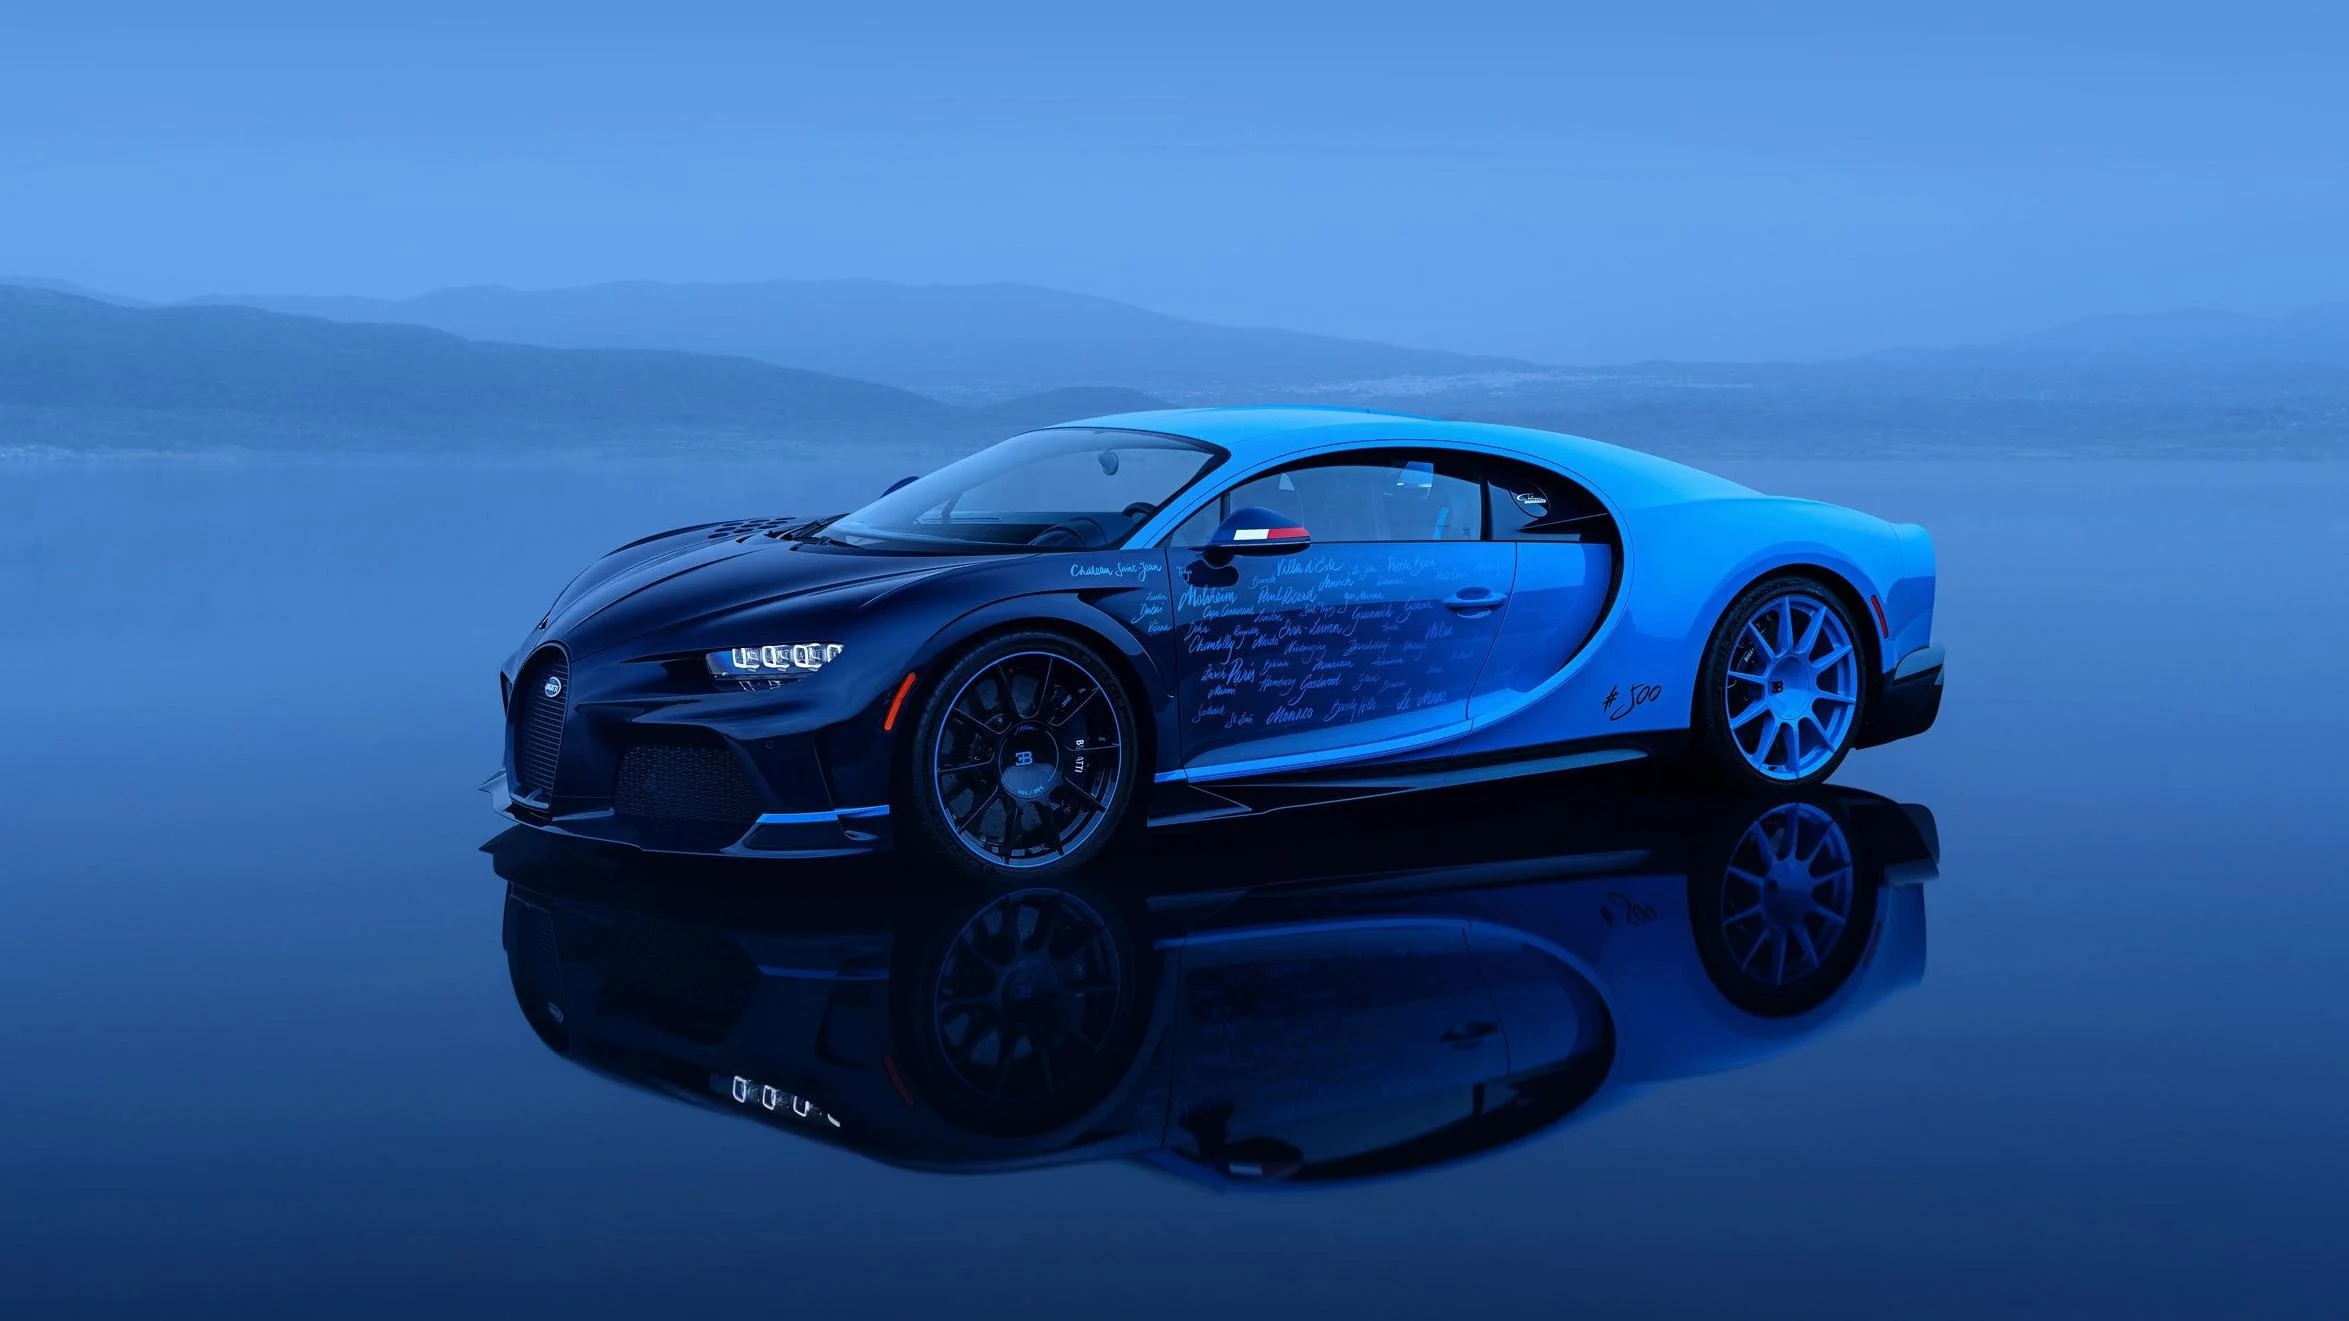 Bugatti’nin İkonik Otomobili Chiron’un Üretimi Sona Erdi: İşte Hayran Kalacağınız Tasarıma Sahip Son Chiron